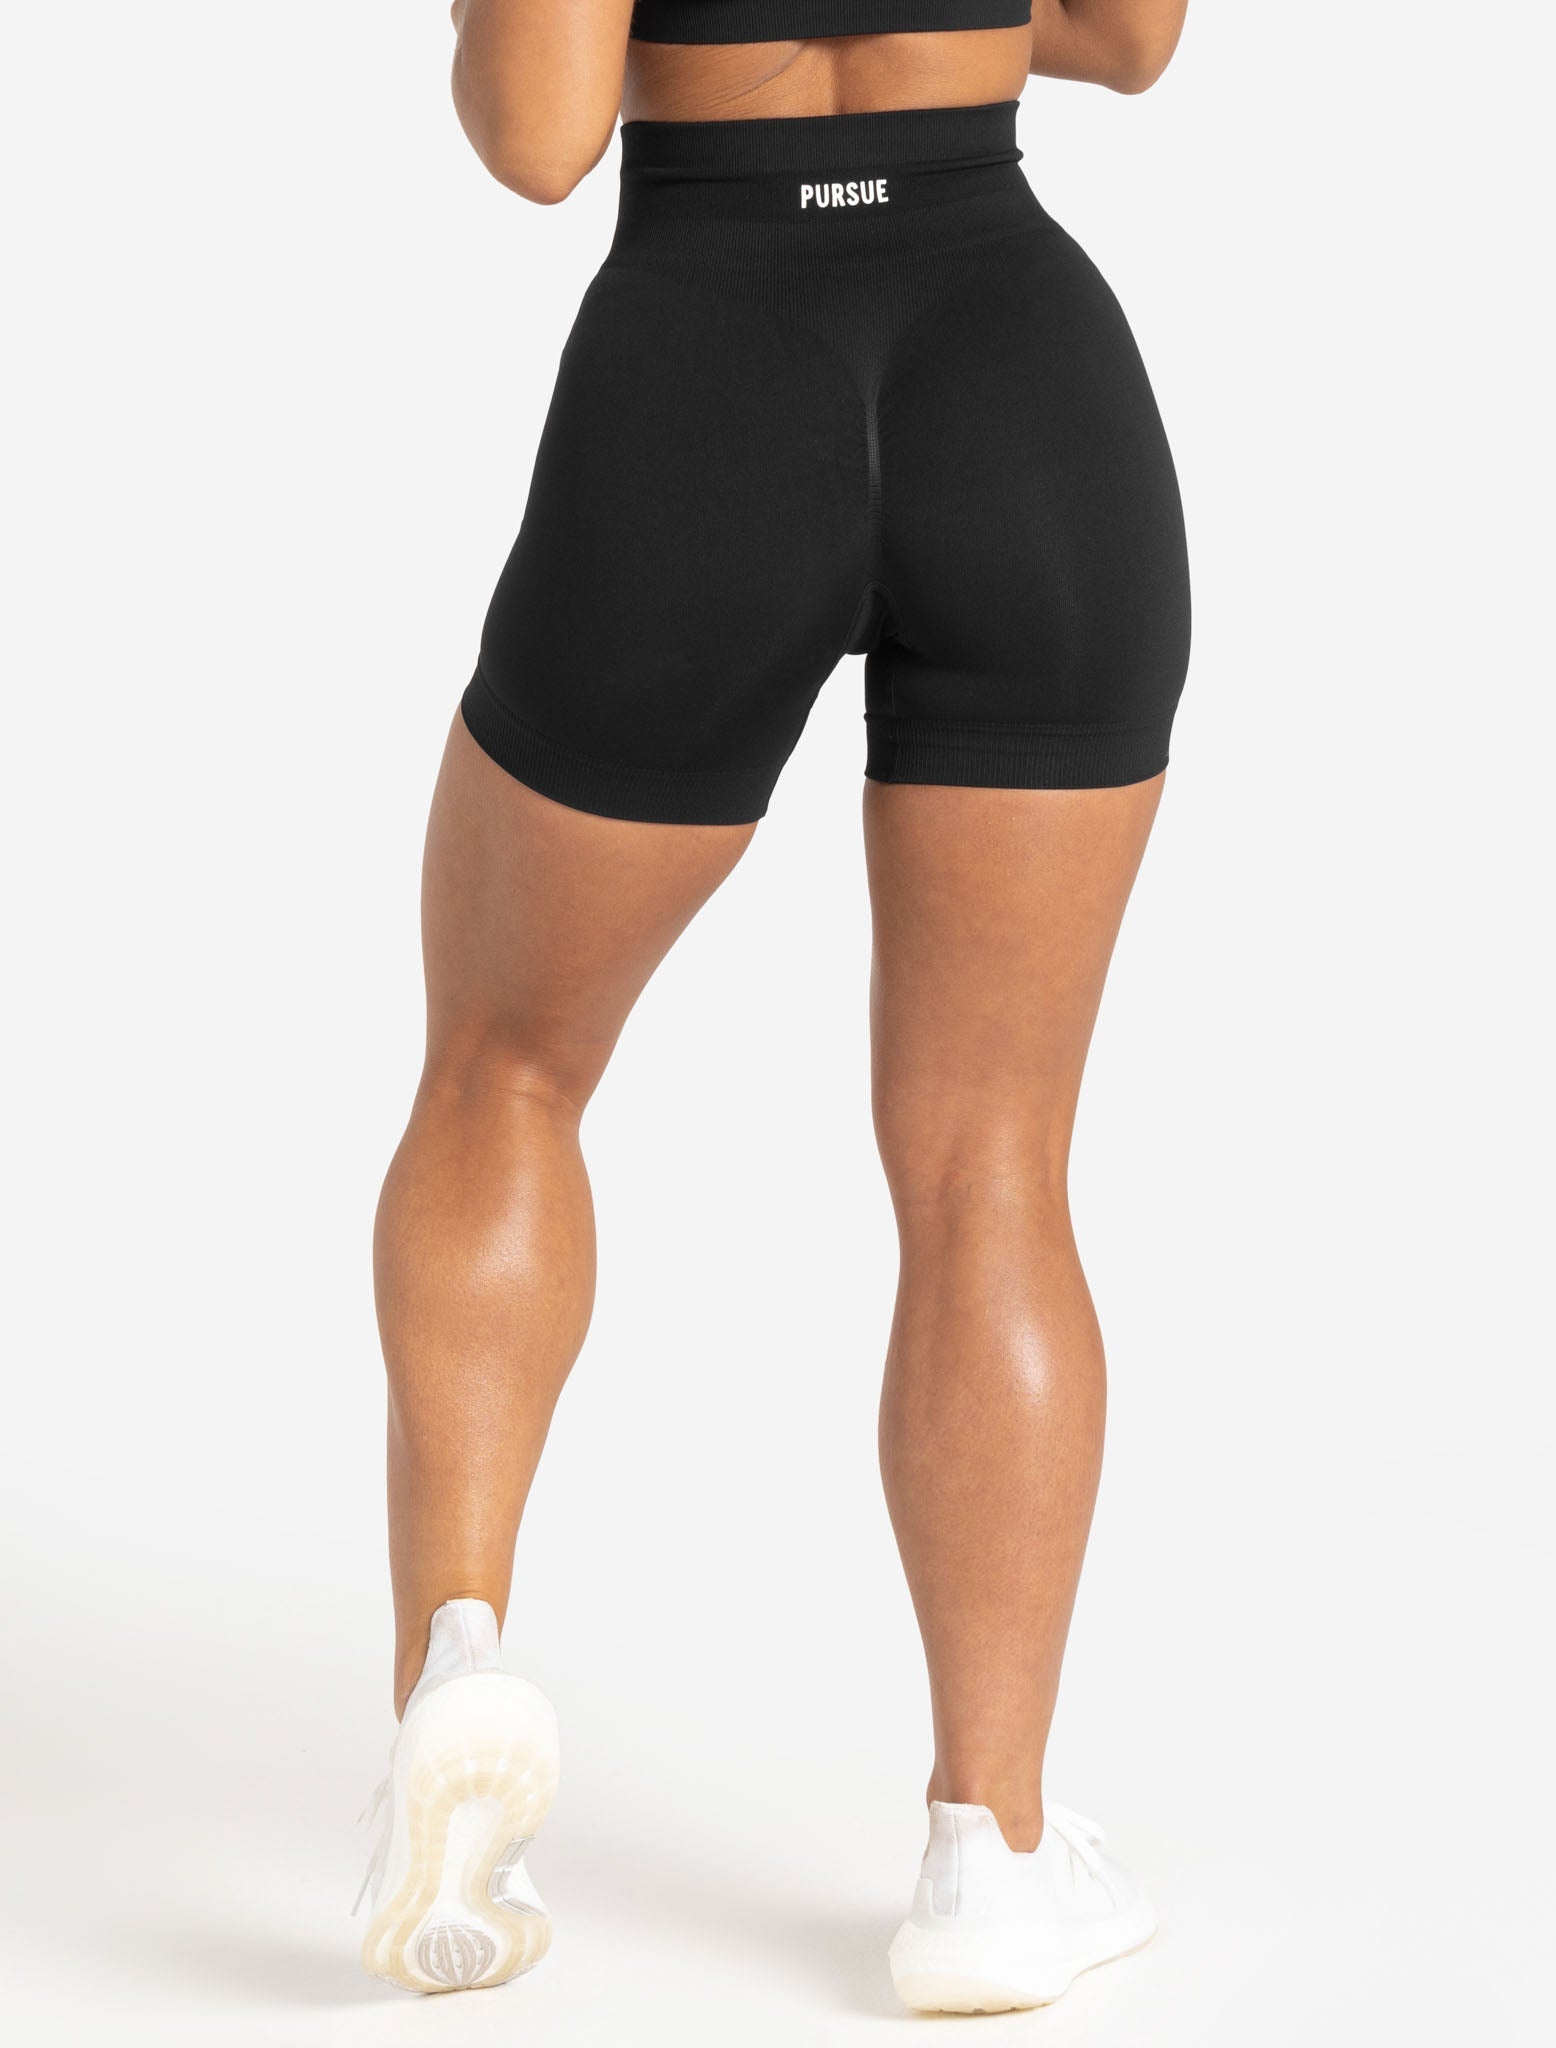 PEASKJP Boy Shorts Underwear for Women Seamless Scrunch Effortless Leggings  Workout Regular Length, Black L 